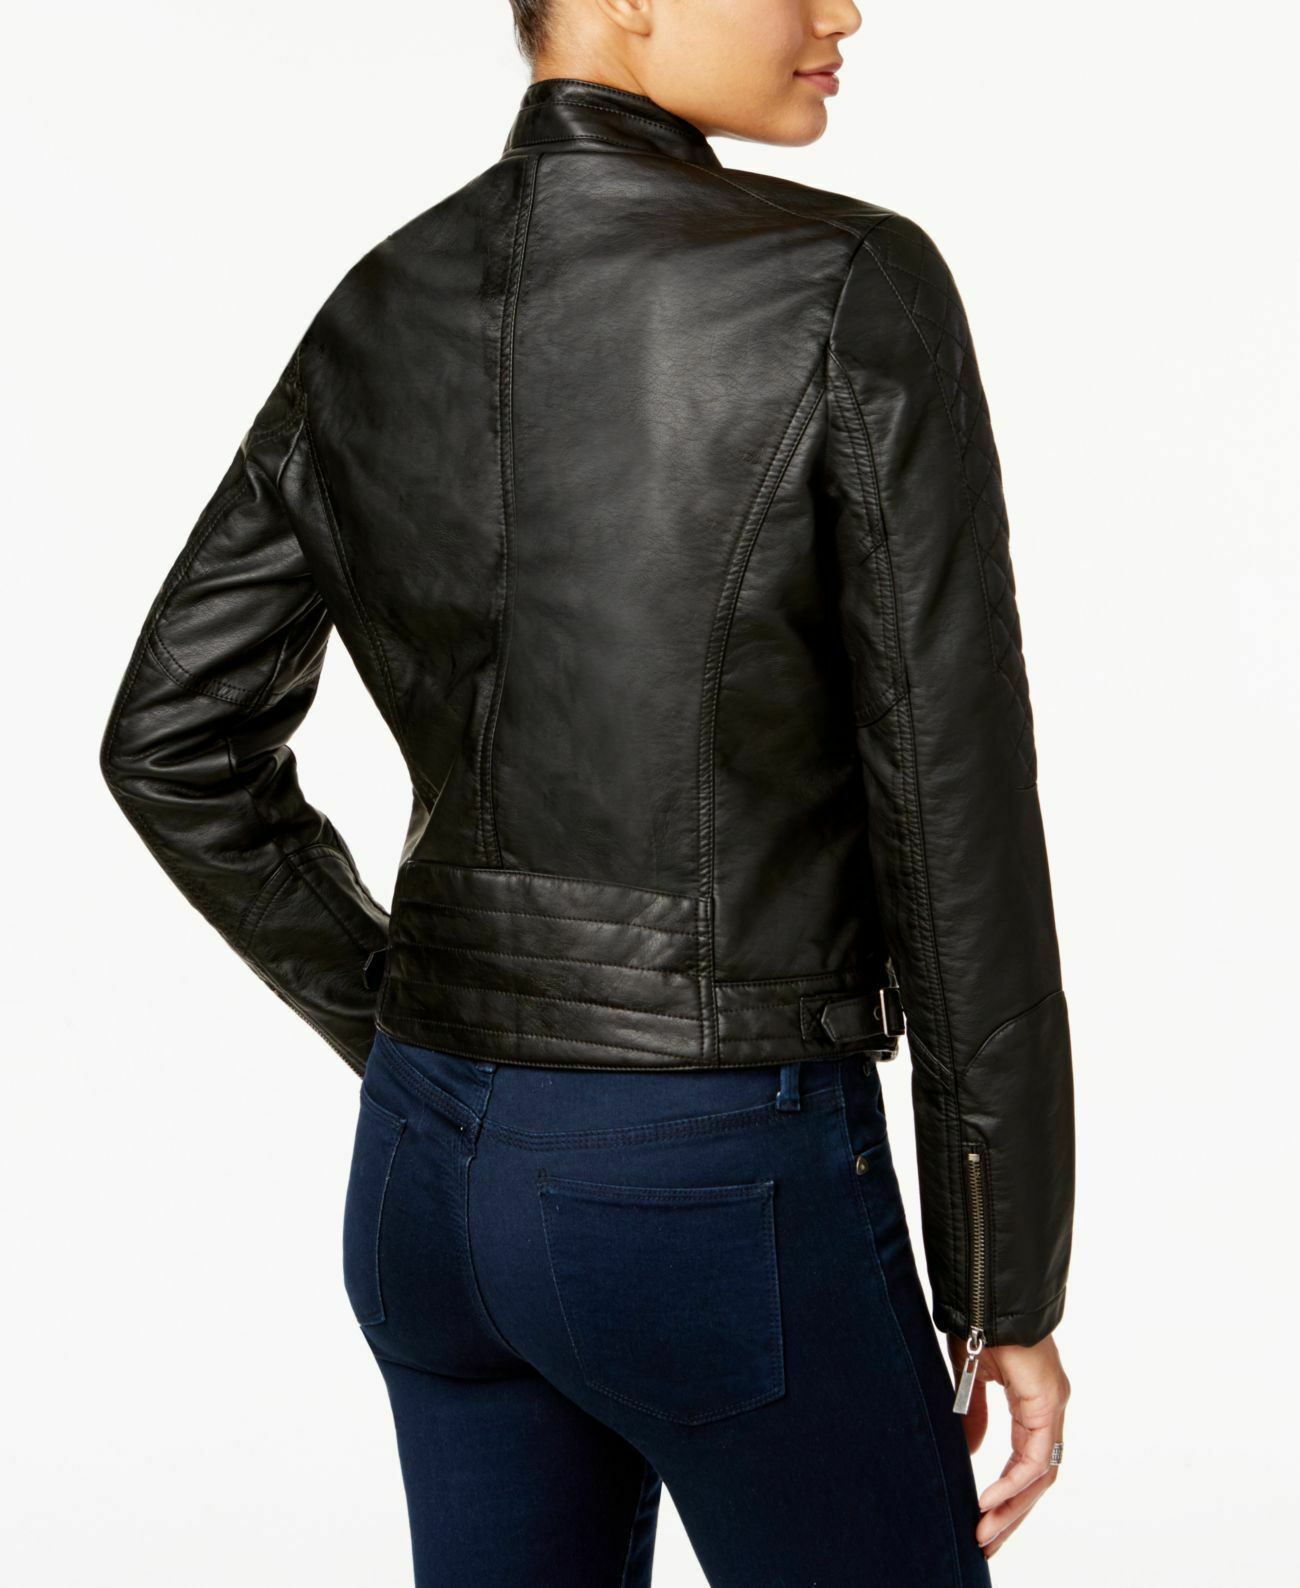 JOU JOU Womens Black Zippered Pocketed Vegan Leather Motorcycle Coat Juniors XS - image 2 of 3